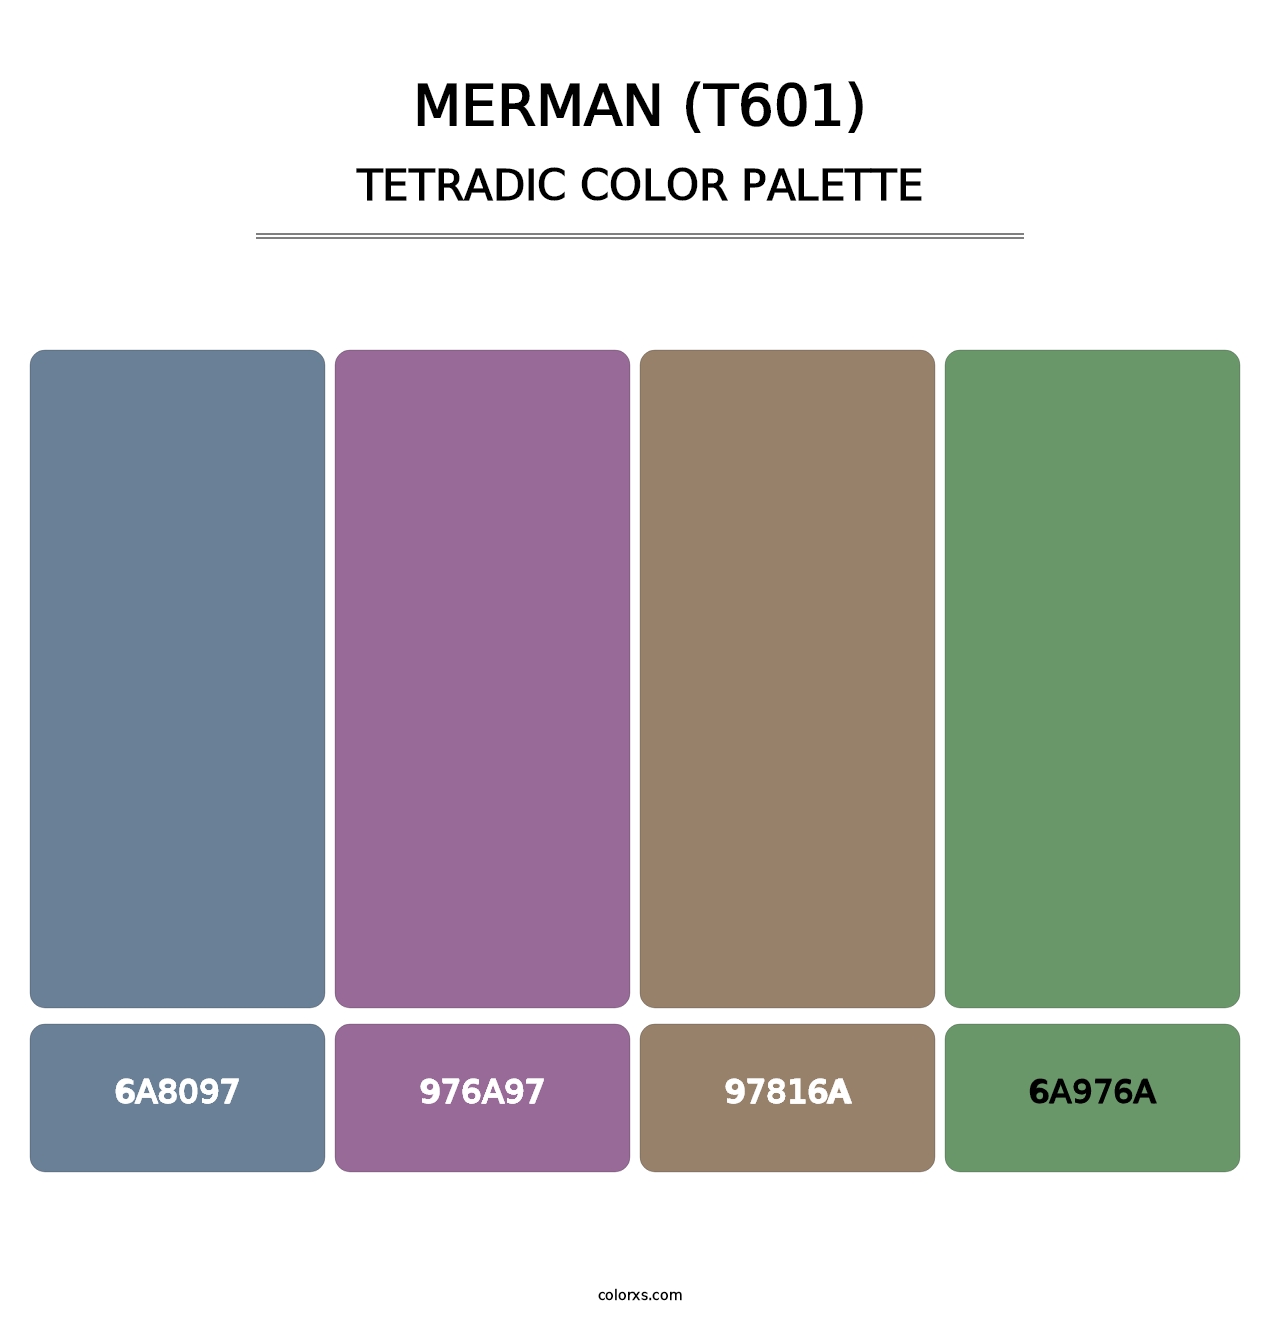 Merman (T601) - Tetradic Color Palette